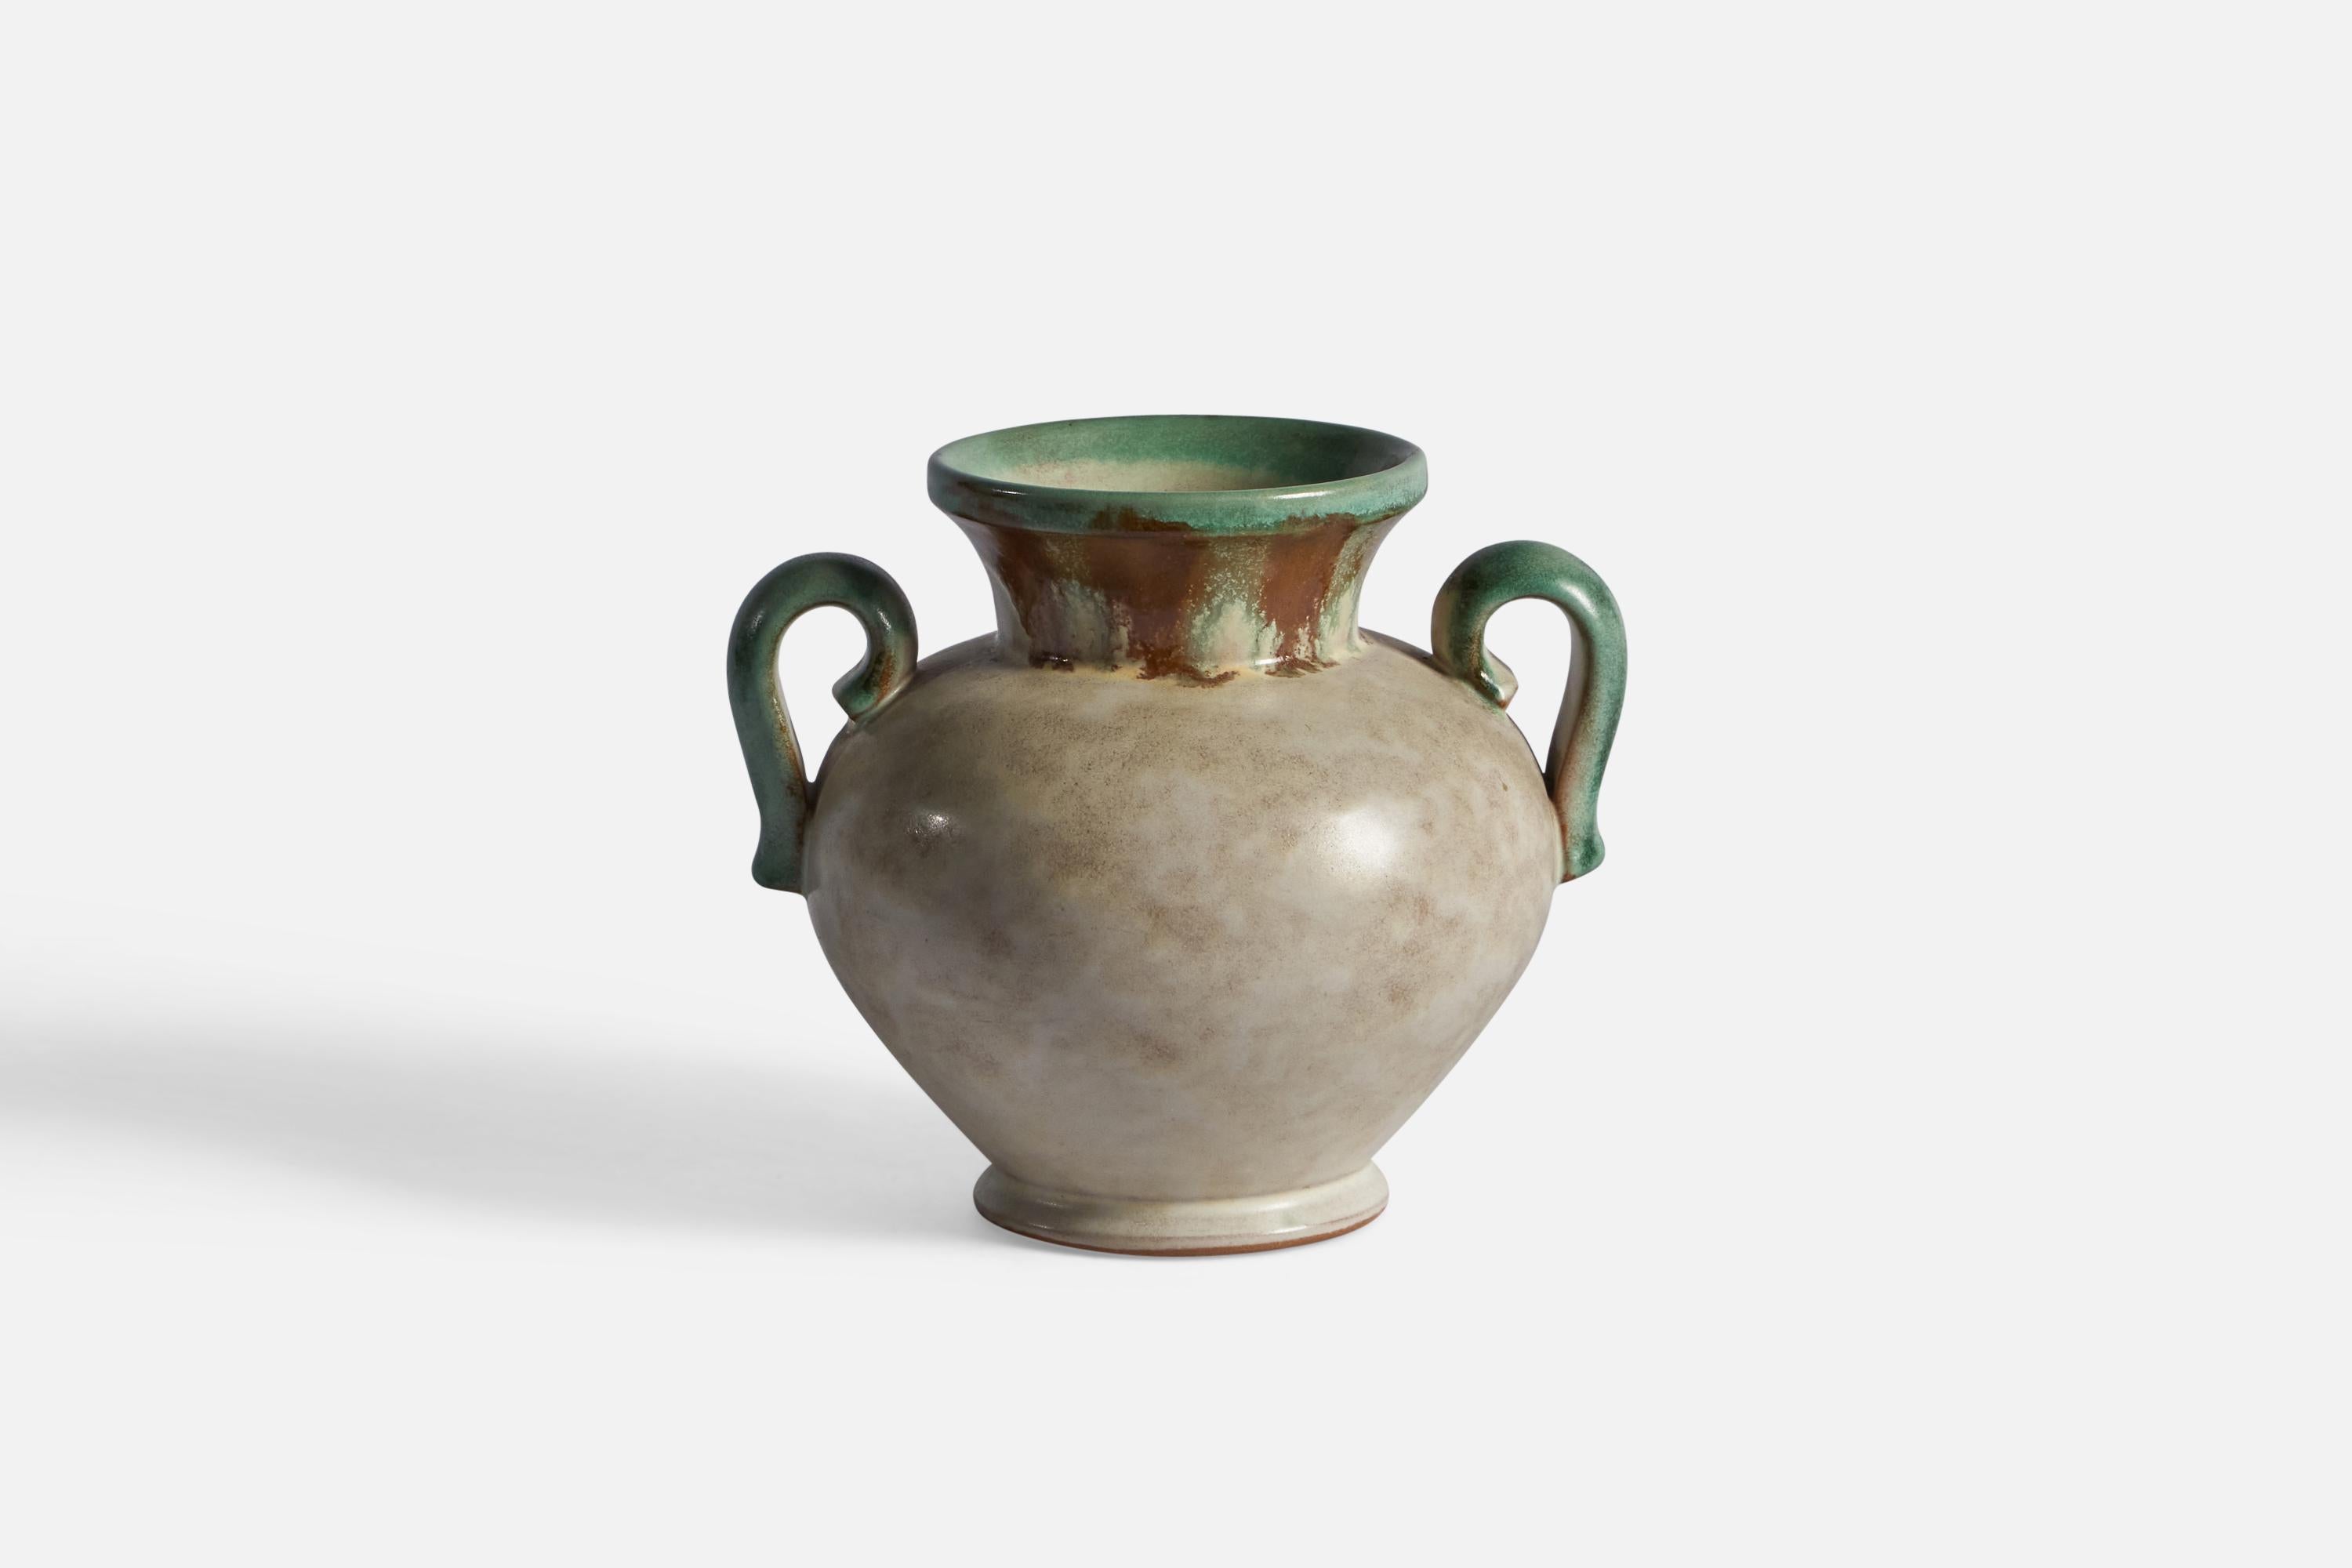 A green and grey-glazed earthenware vase, designed and produced by Töreboda Keramik, Sweden c. 1940s.